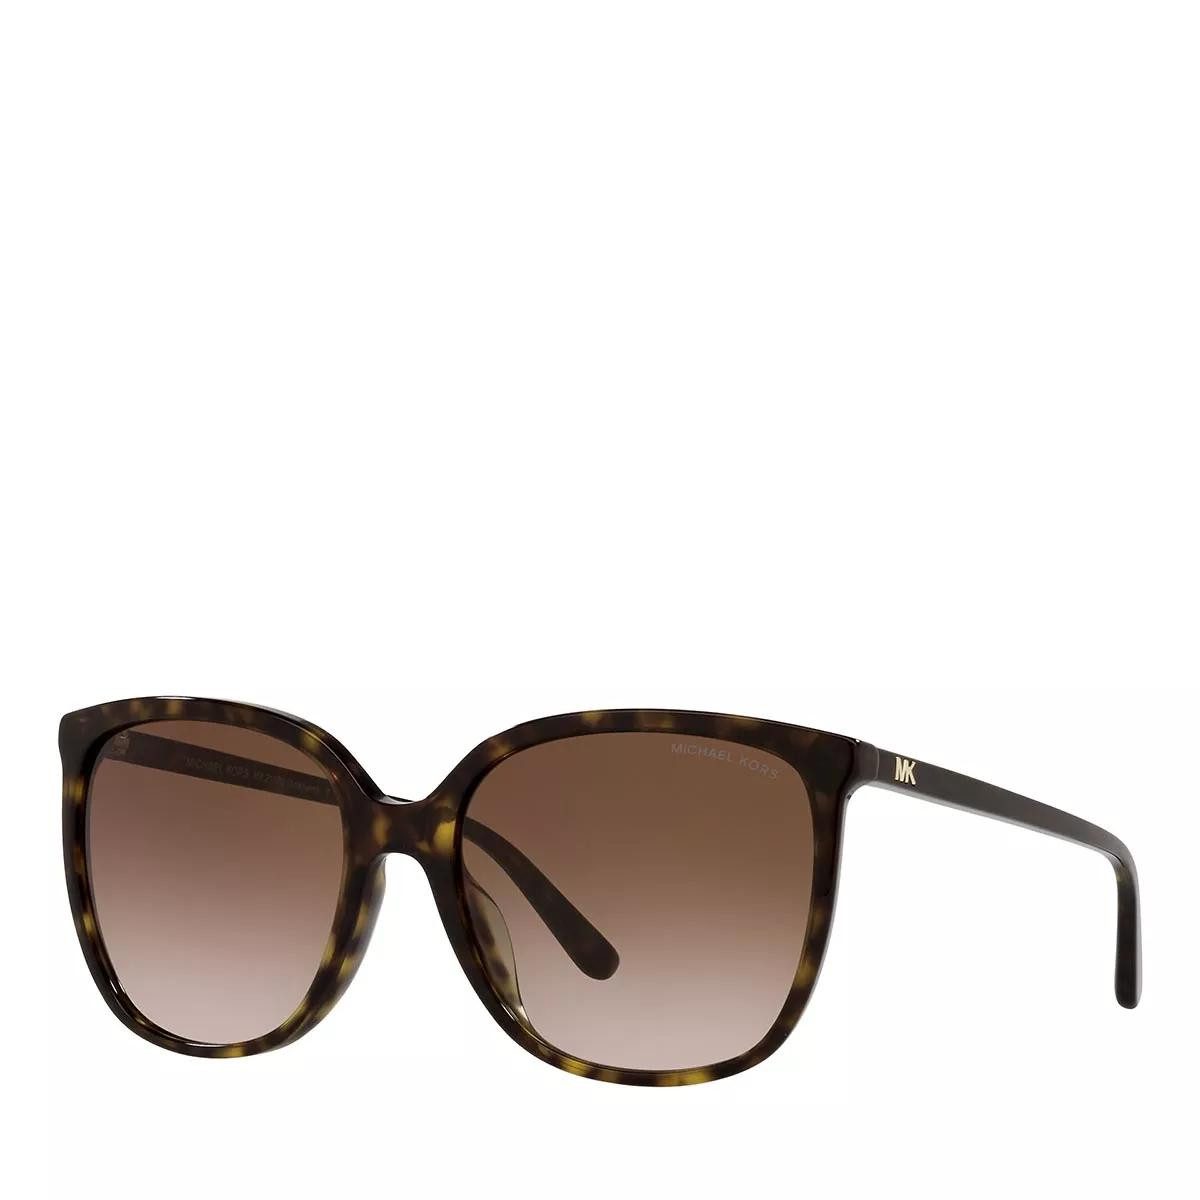 MICHAEL KORS Sonnenbrille dark brown (1-St)